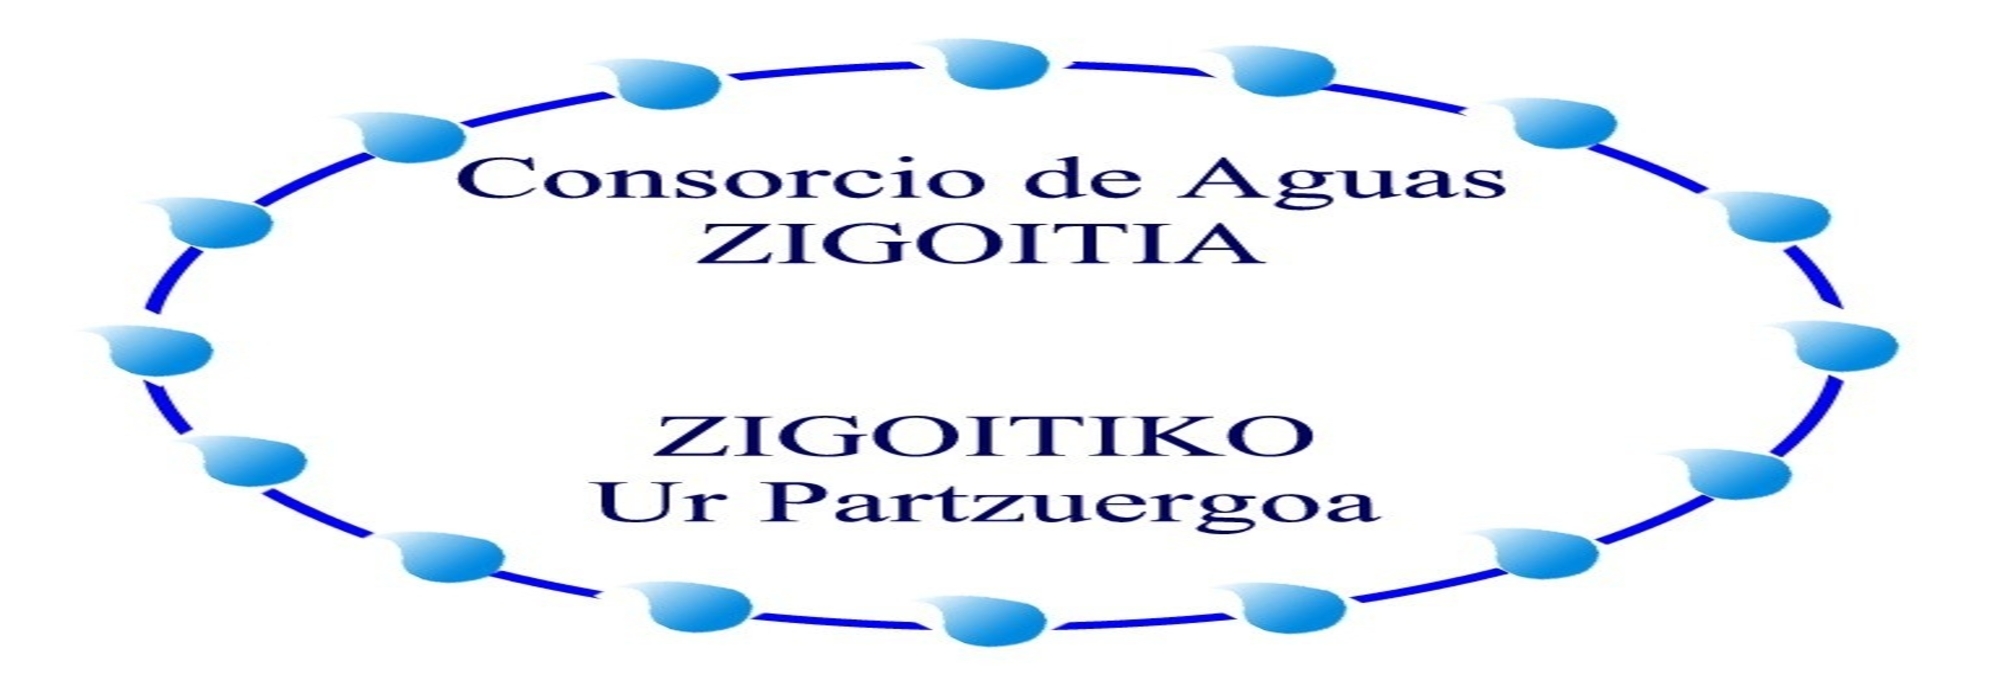 2. Consorcio de Aguas de Zigoitia